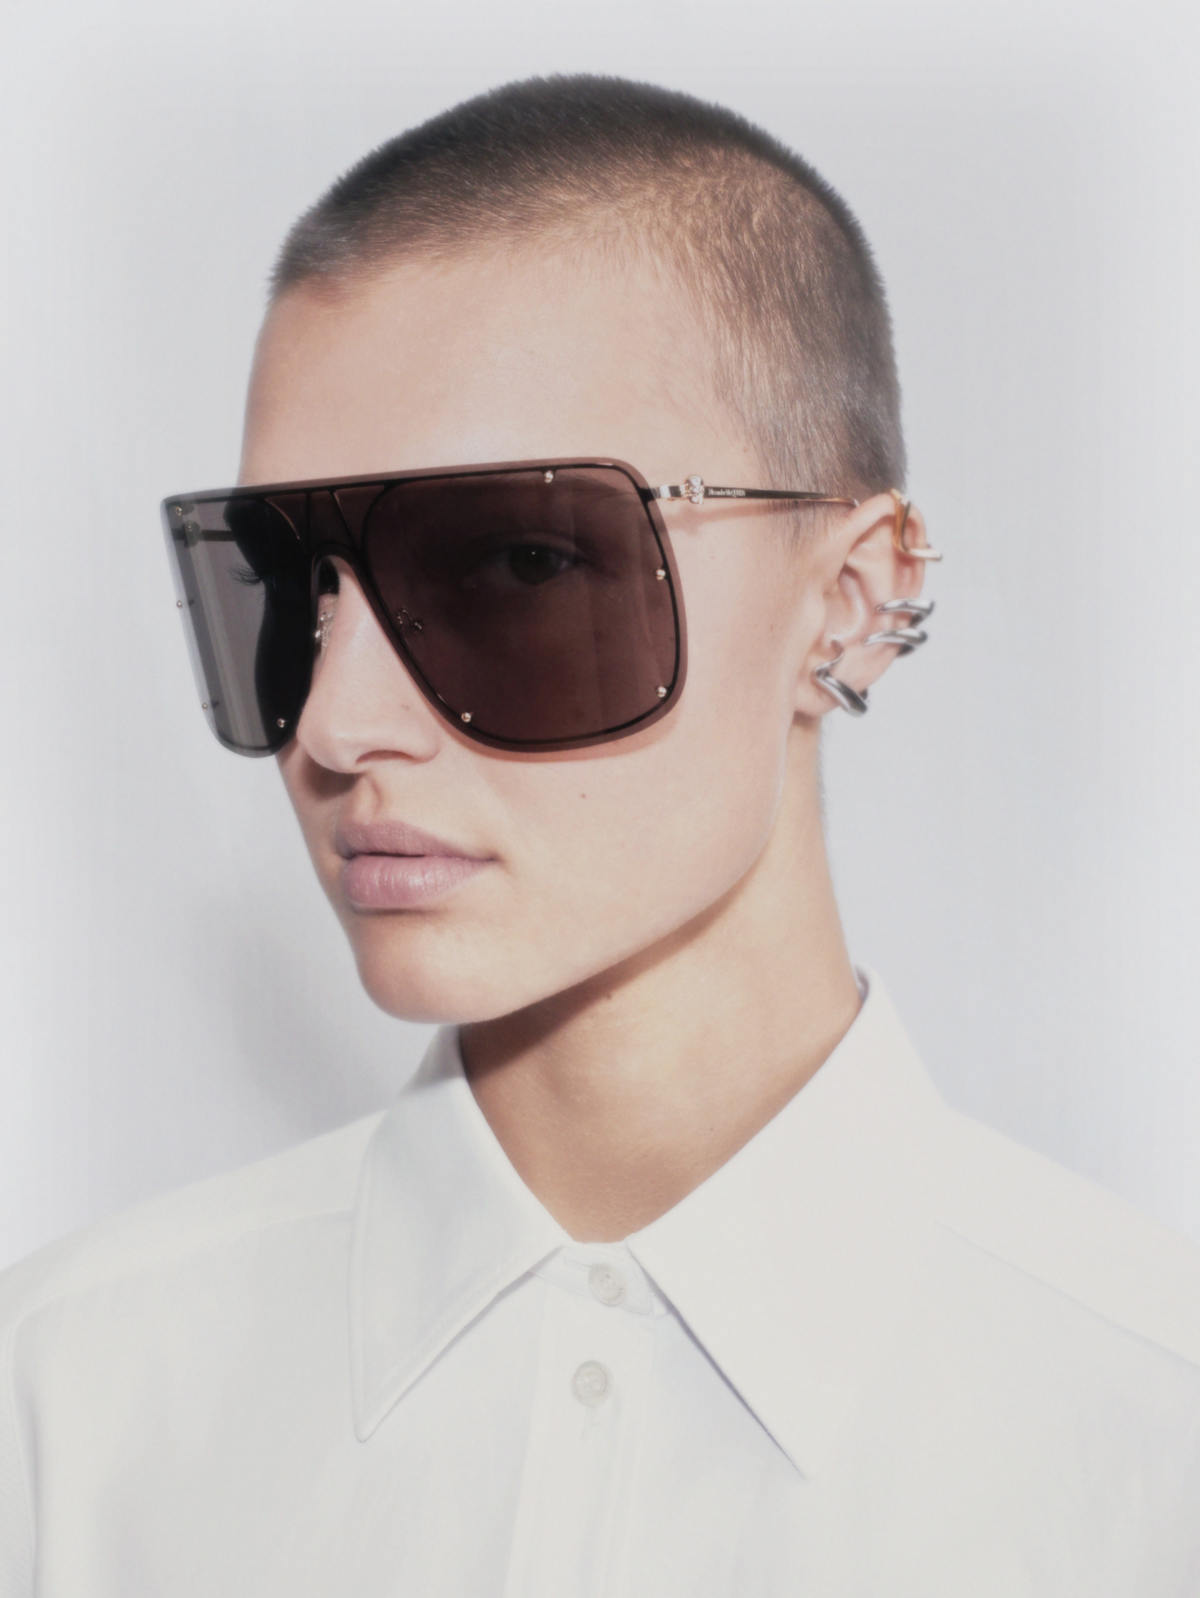 Alexander McQueen's Spring-Summer 2021 Women’s Eyewear